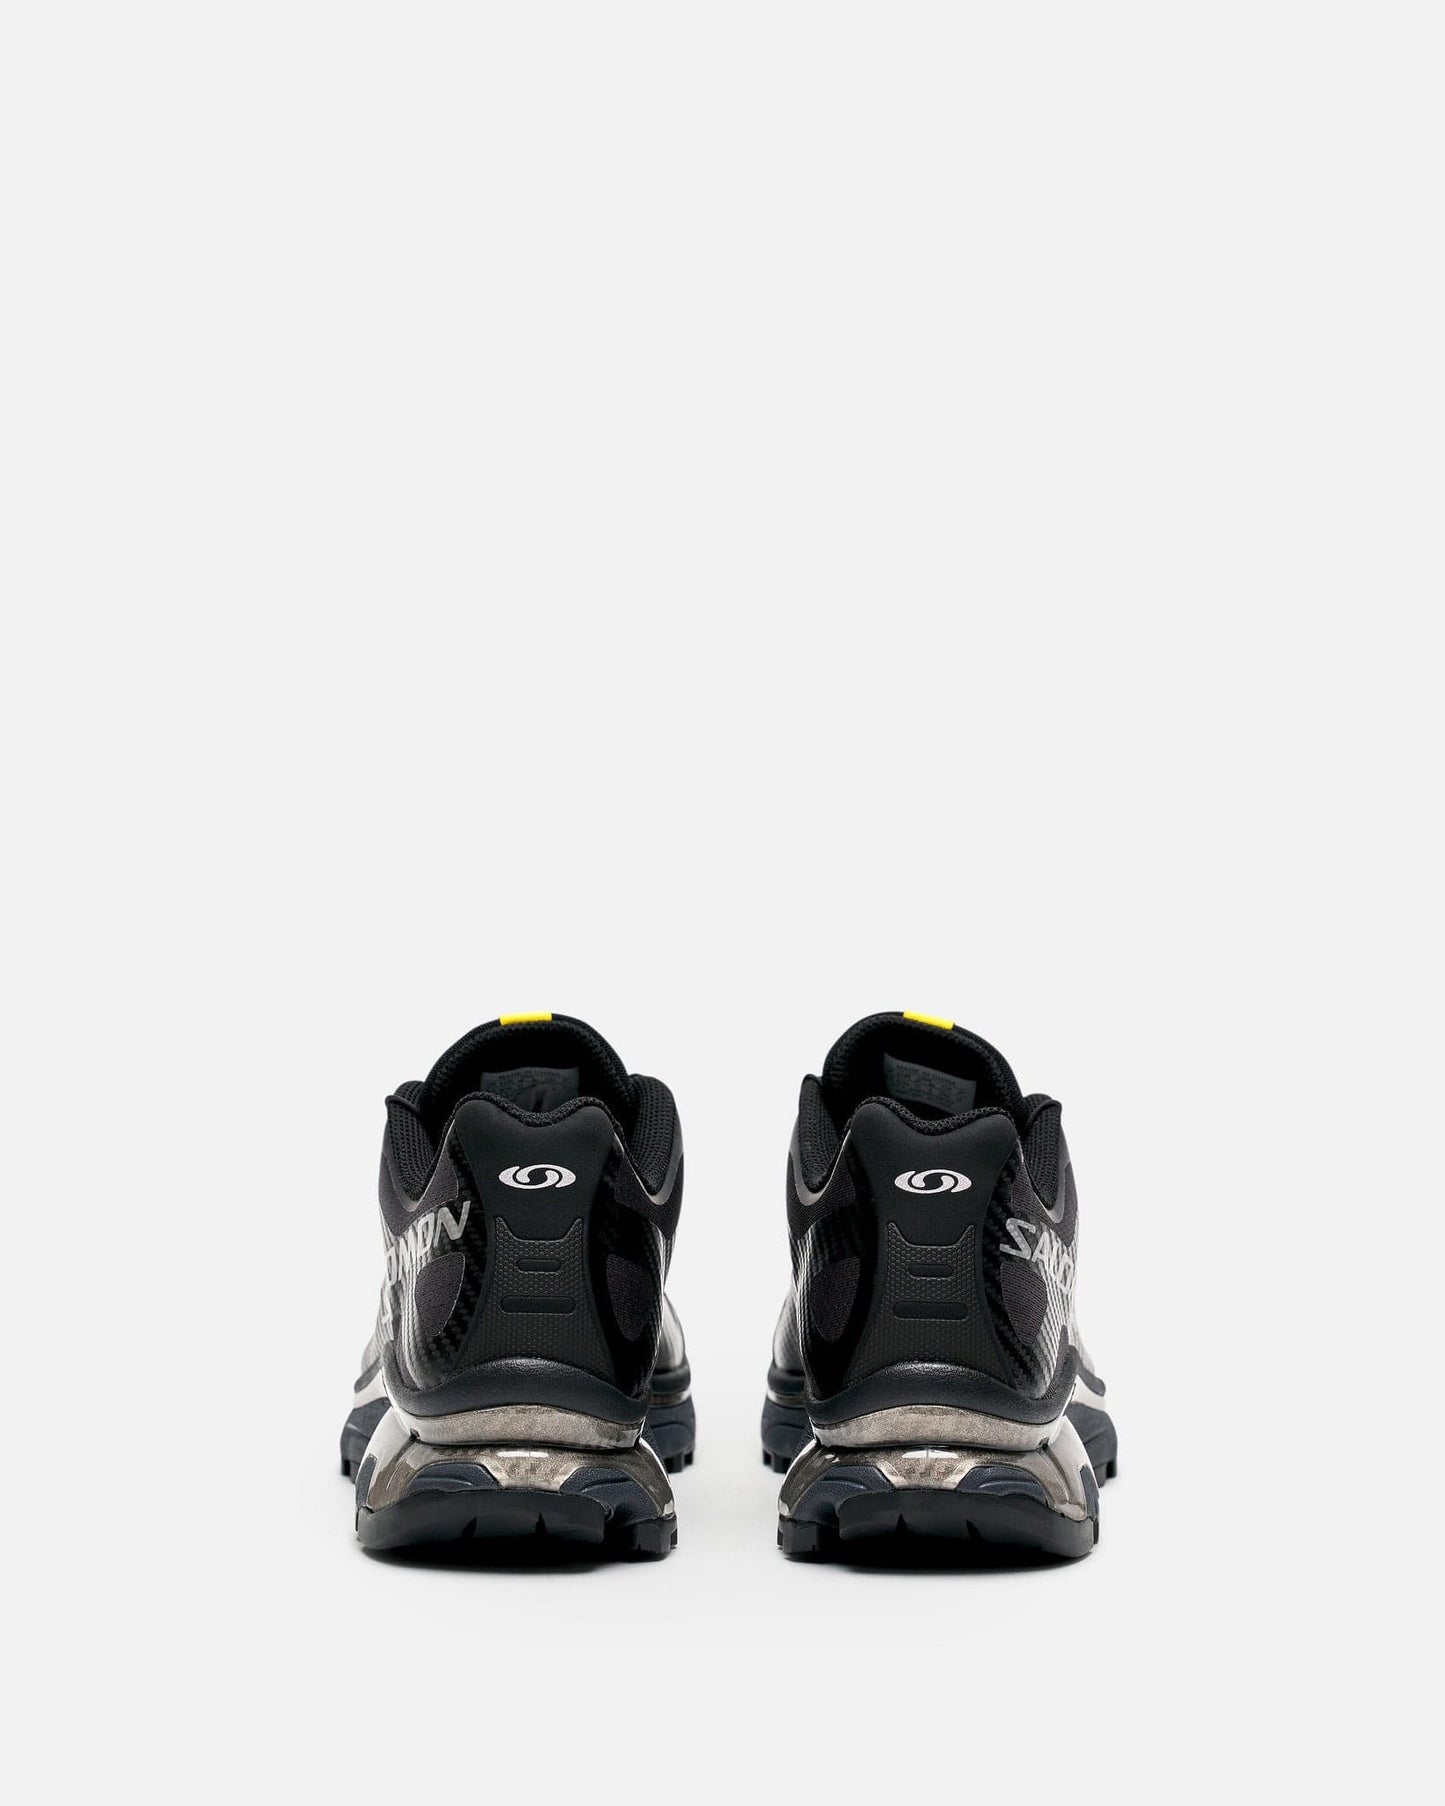 Salomon Men's Sneakers XT-4 OG in Black/Ebony